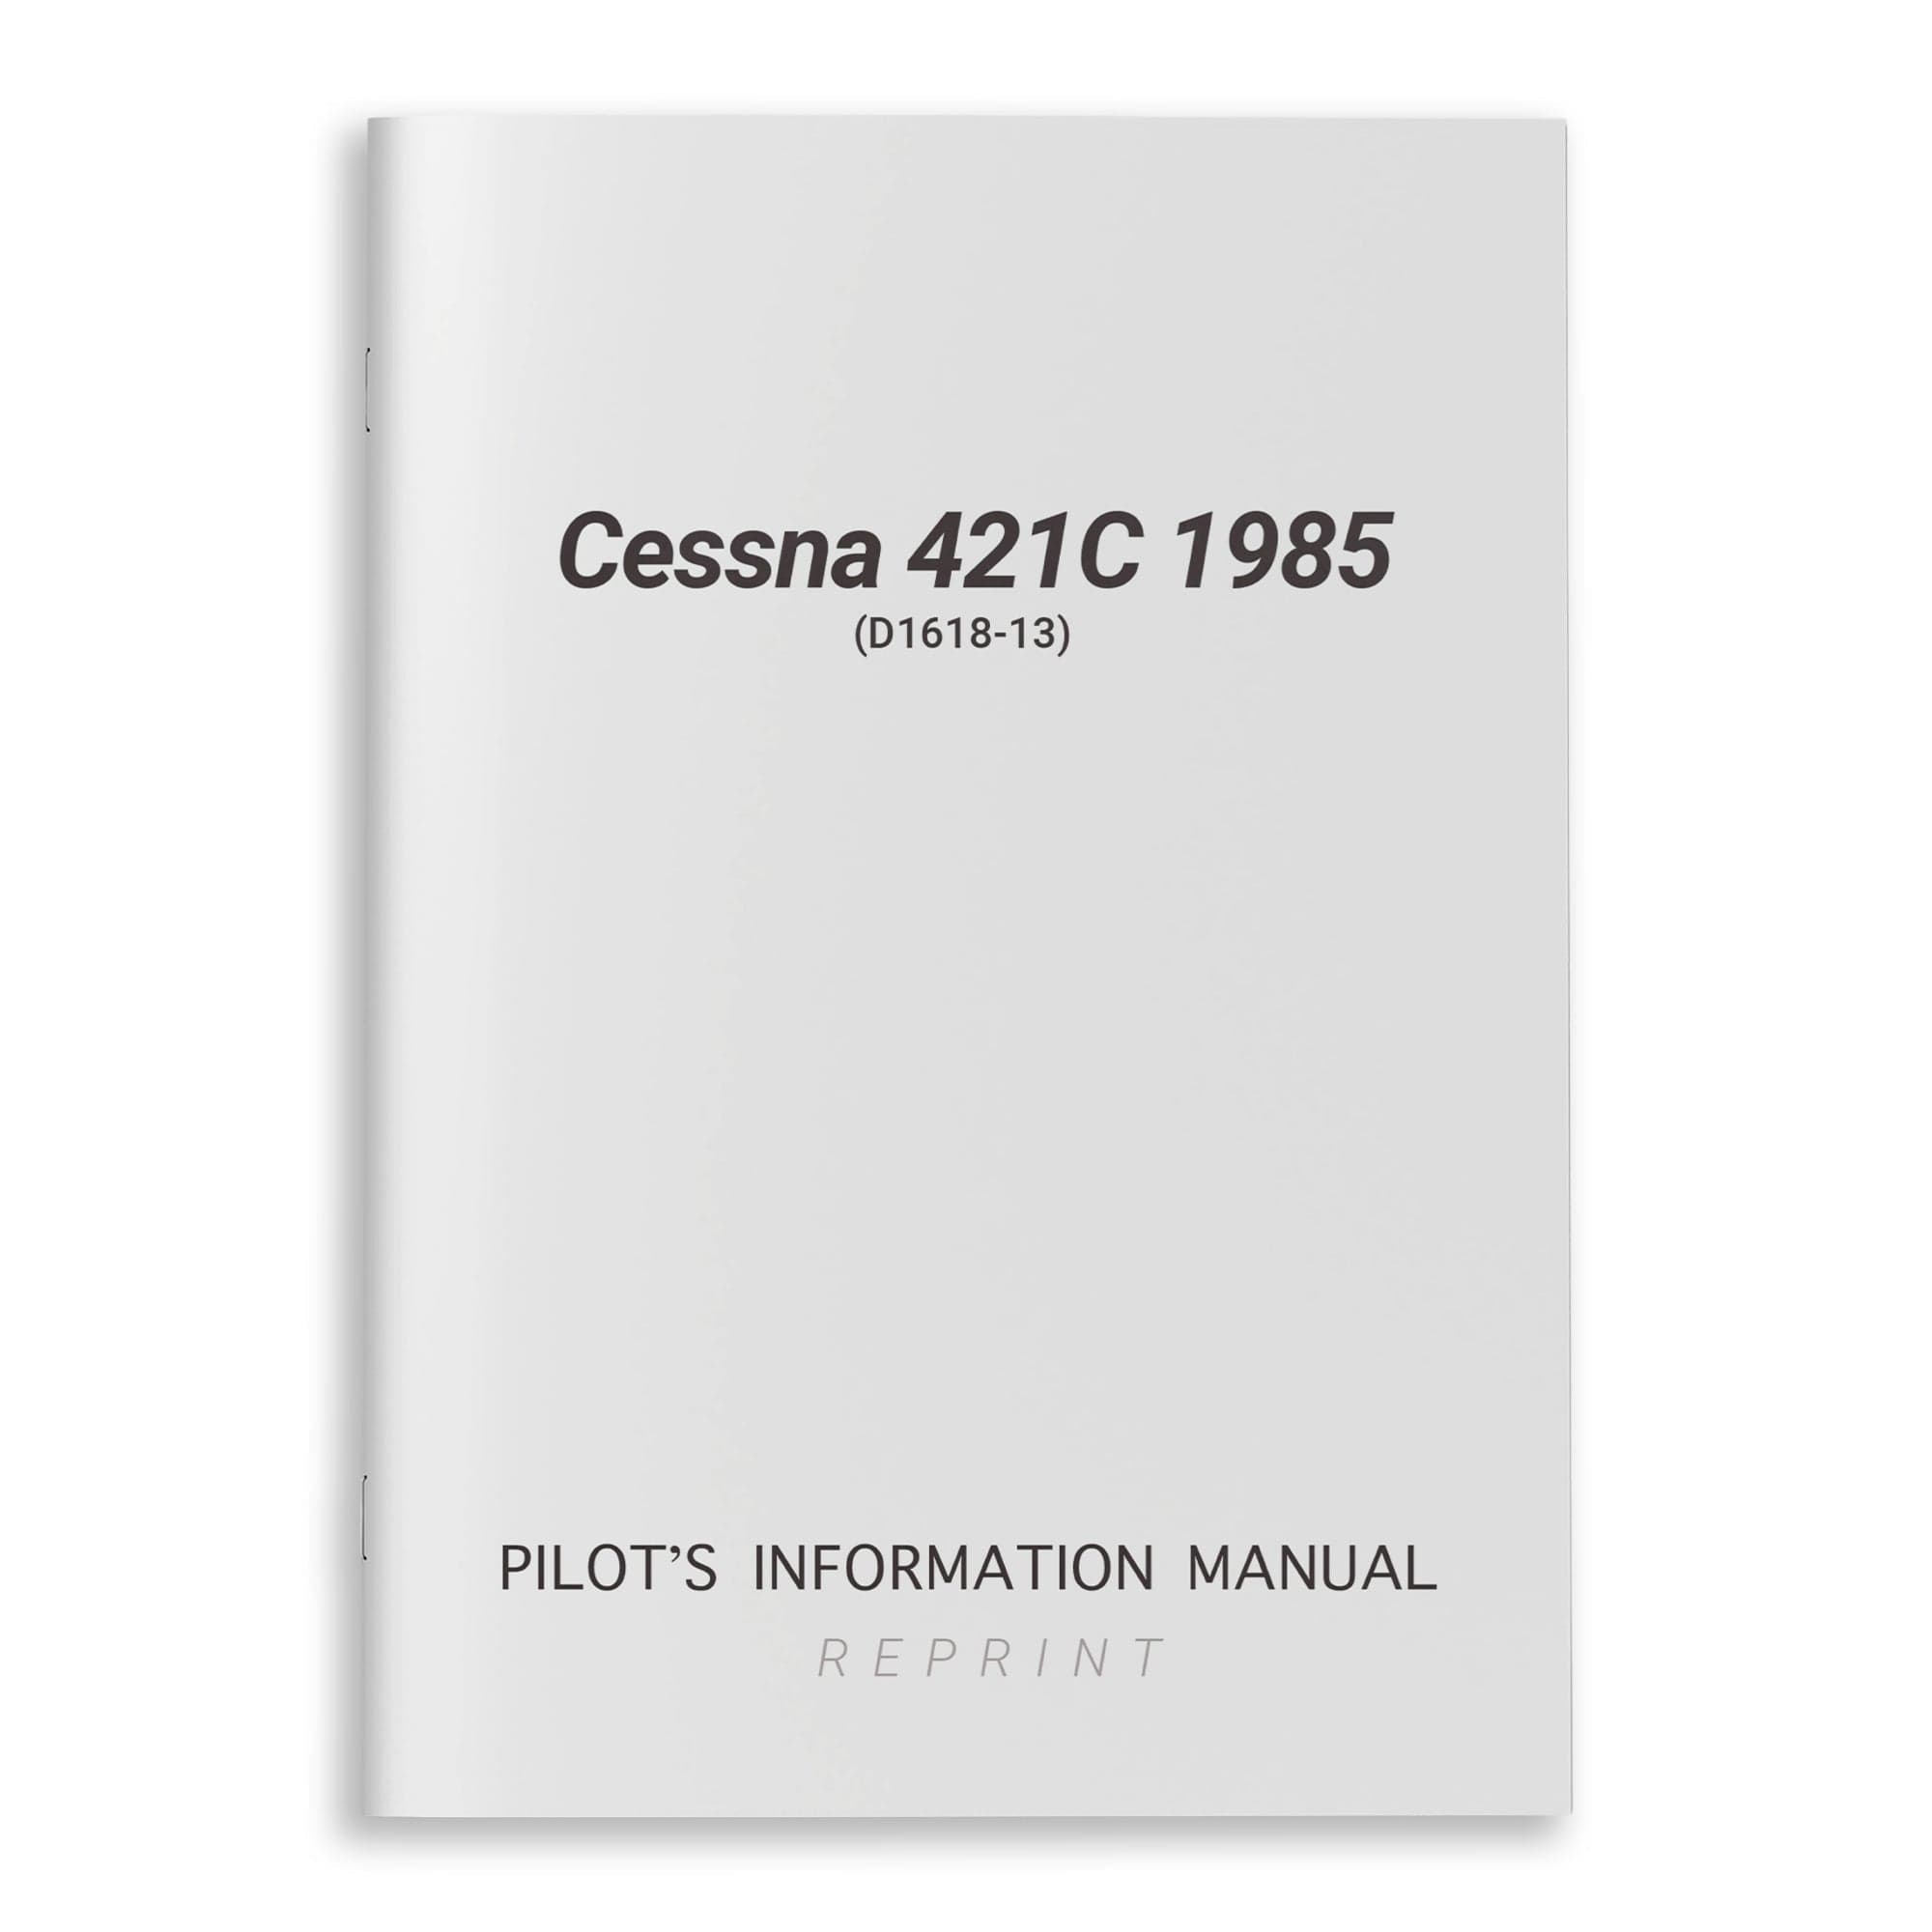 Cessna 421C 1985 Pilot's Information Manual (D1618-13)